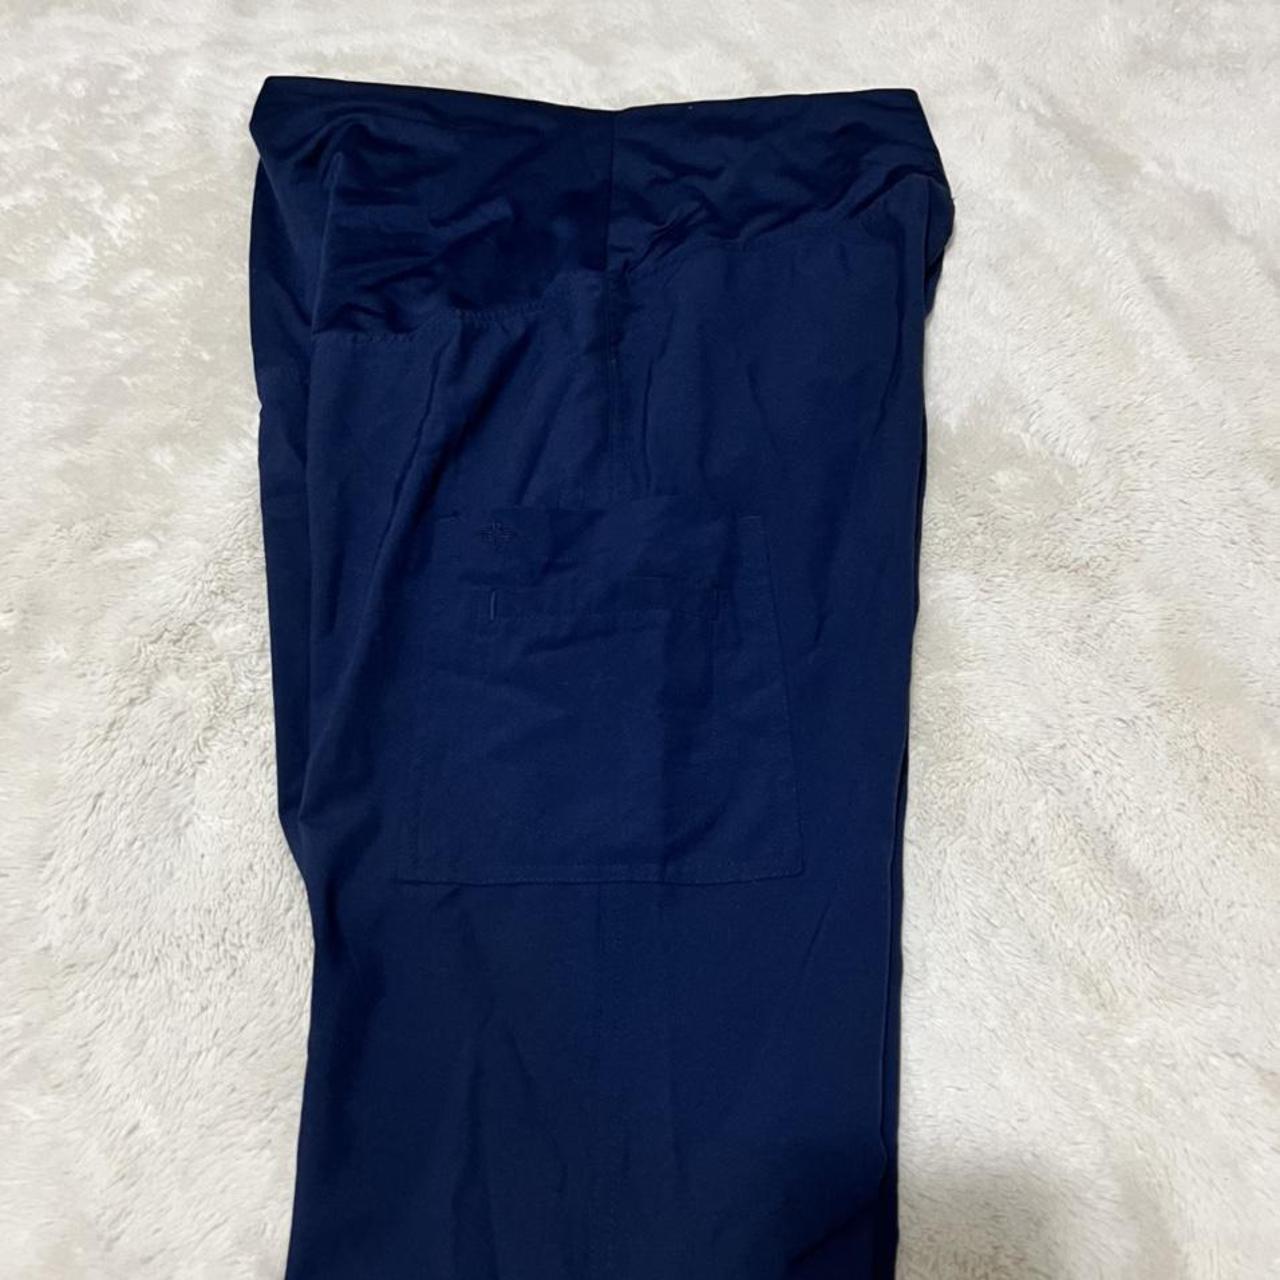 Product Image 4 - Maternity scrubs Pants
Side pocket